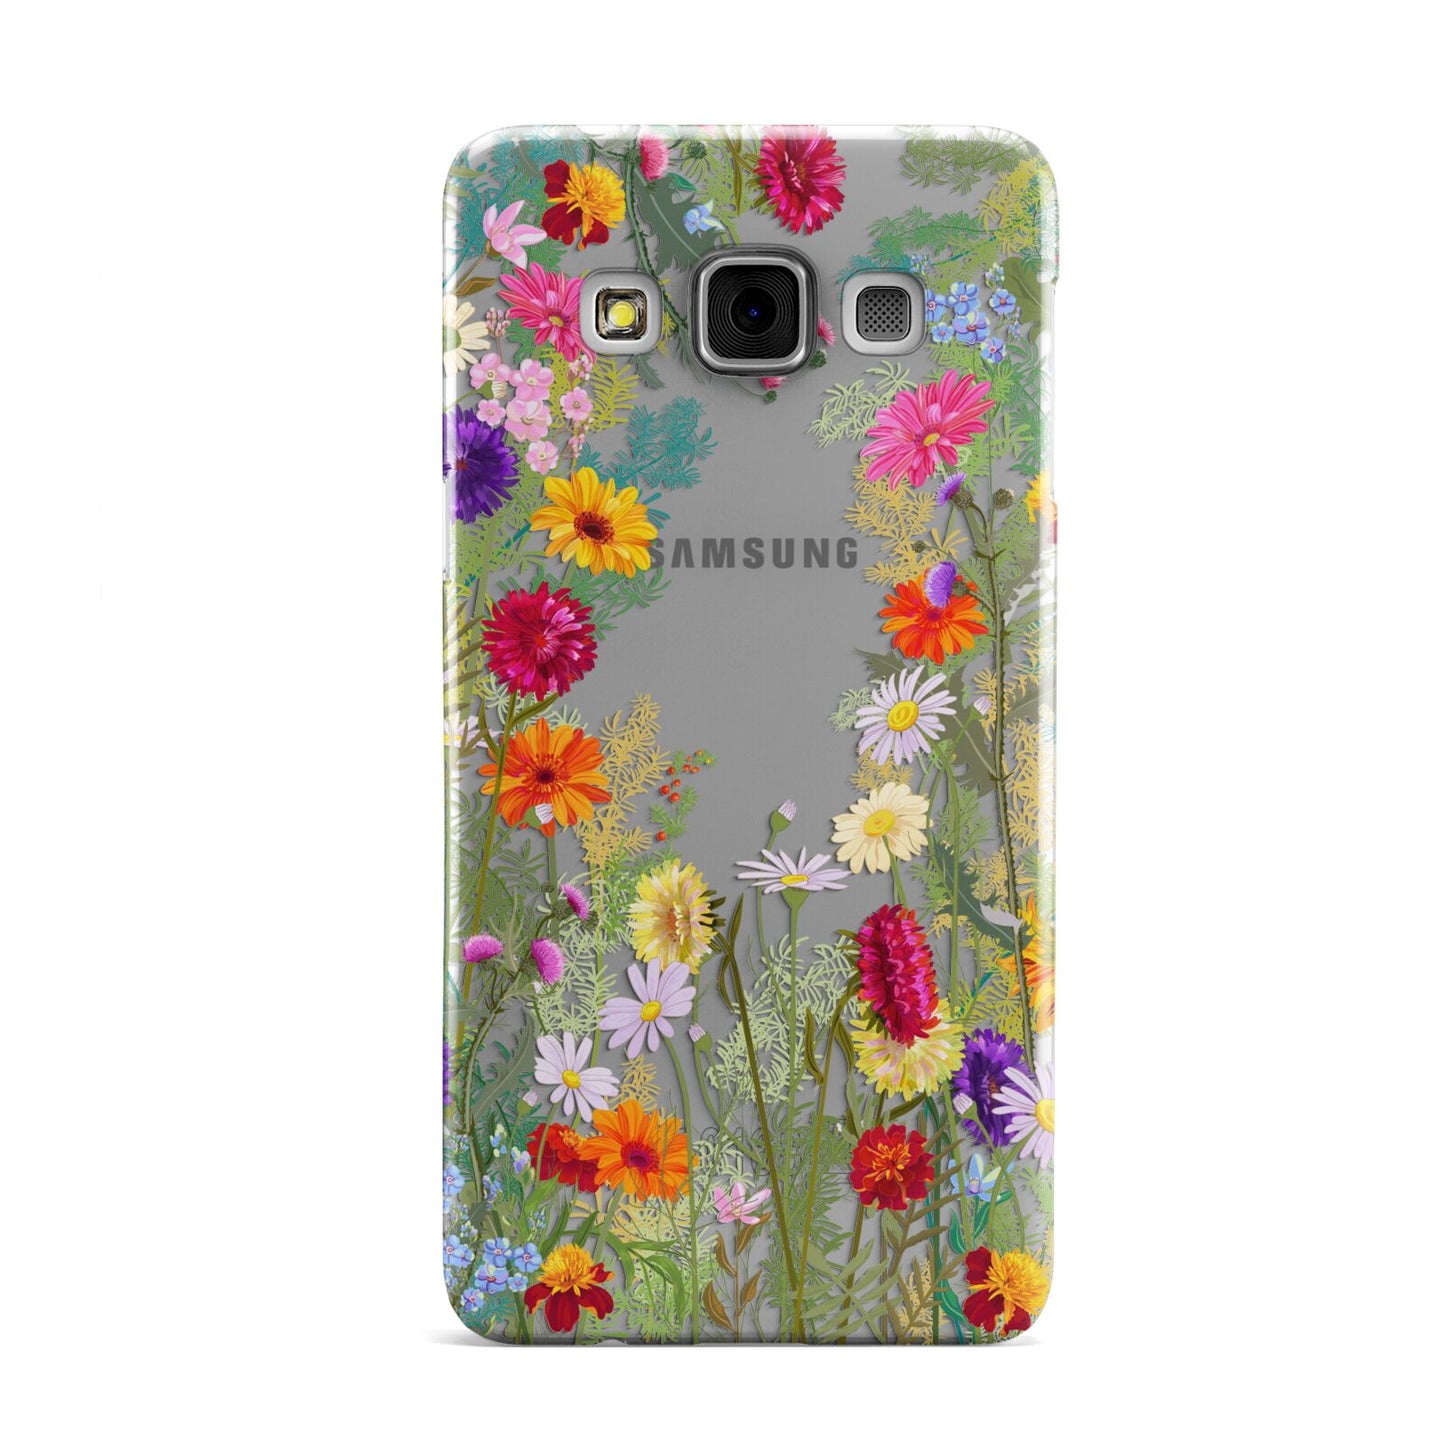 Wildflower Samsung Galaxy A3 Case